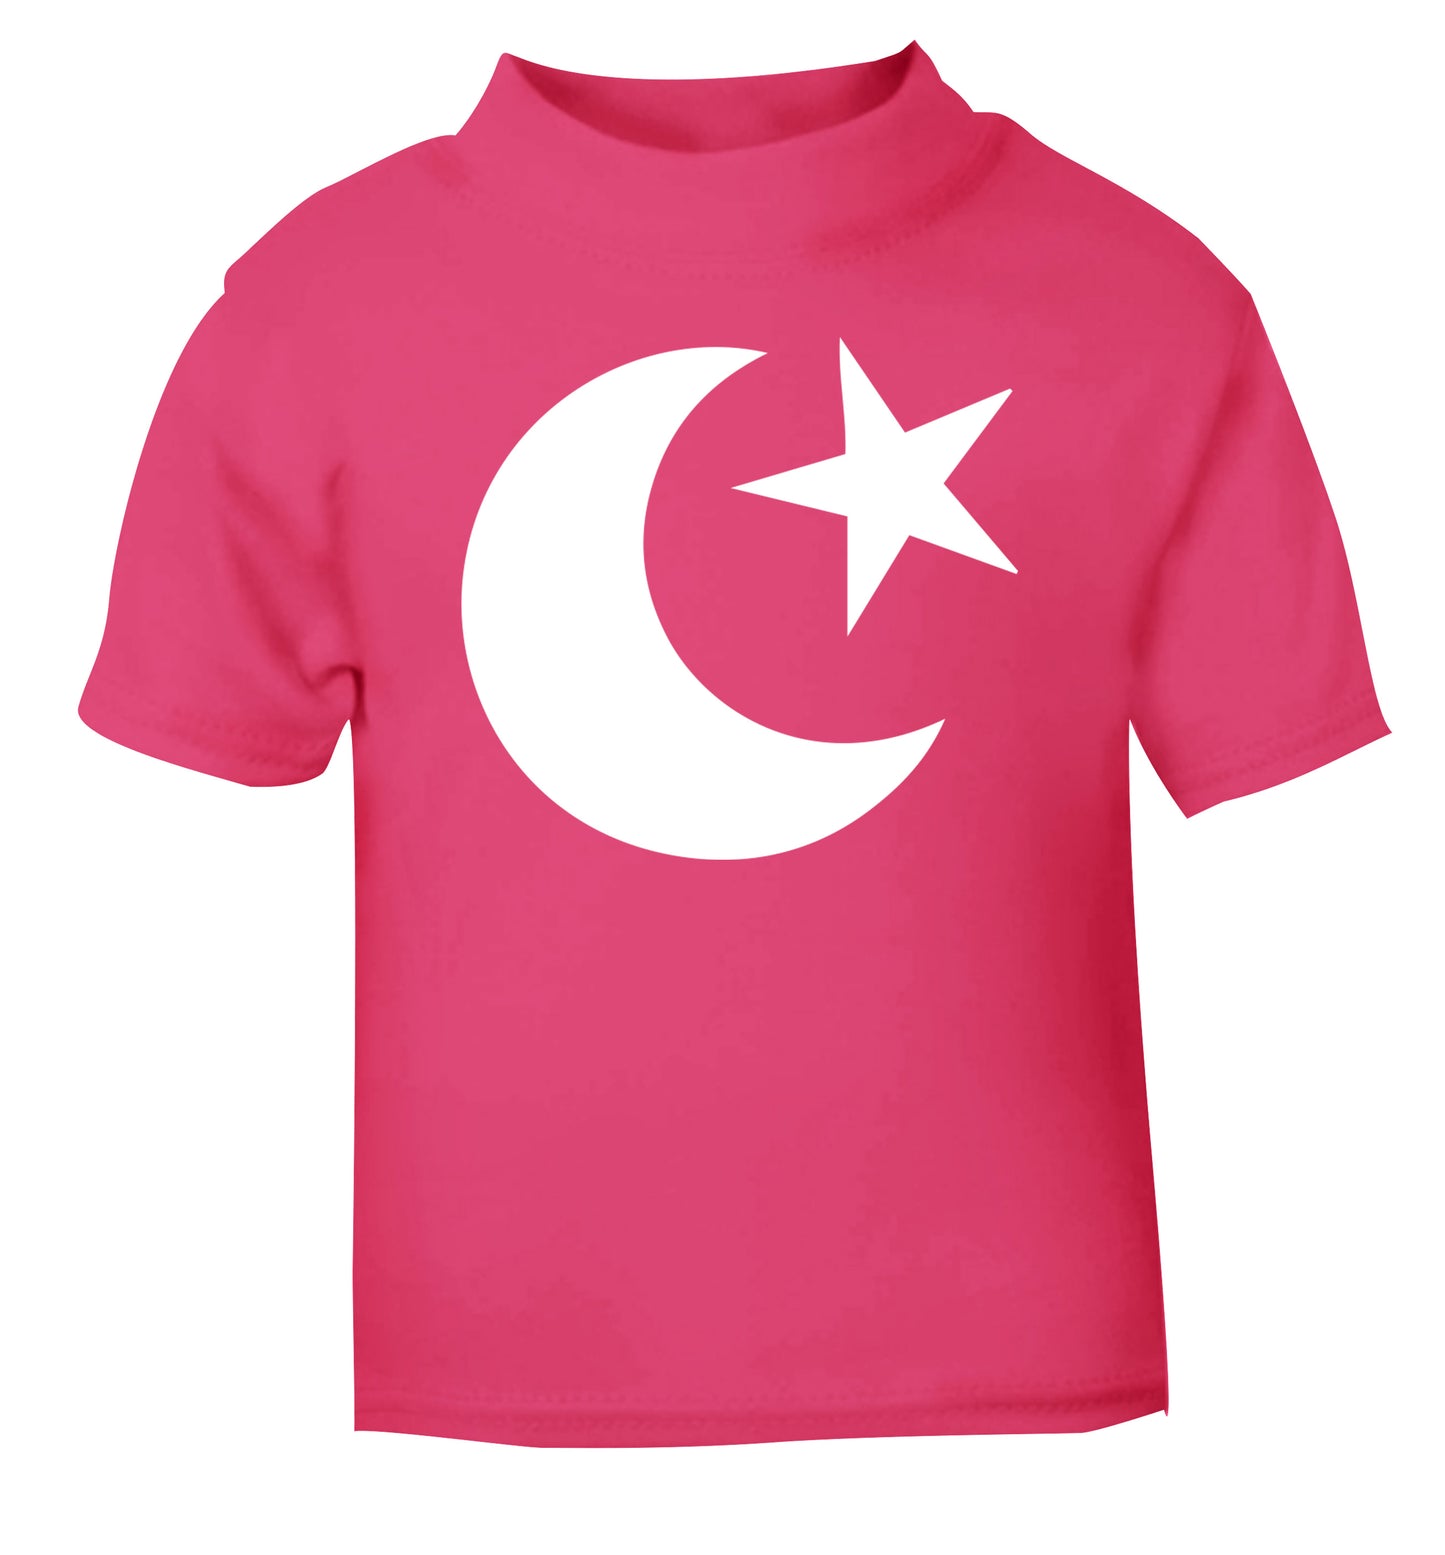 Eid symbol pink baby toddler Tshirt 2 Years